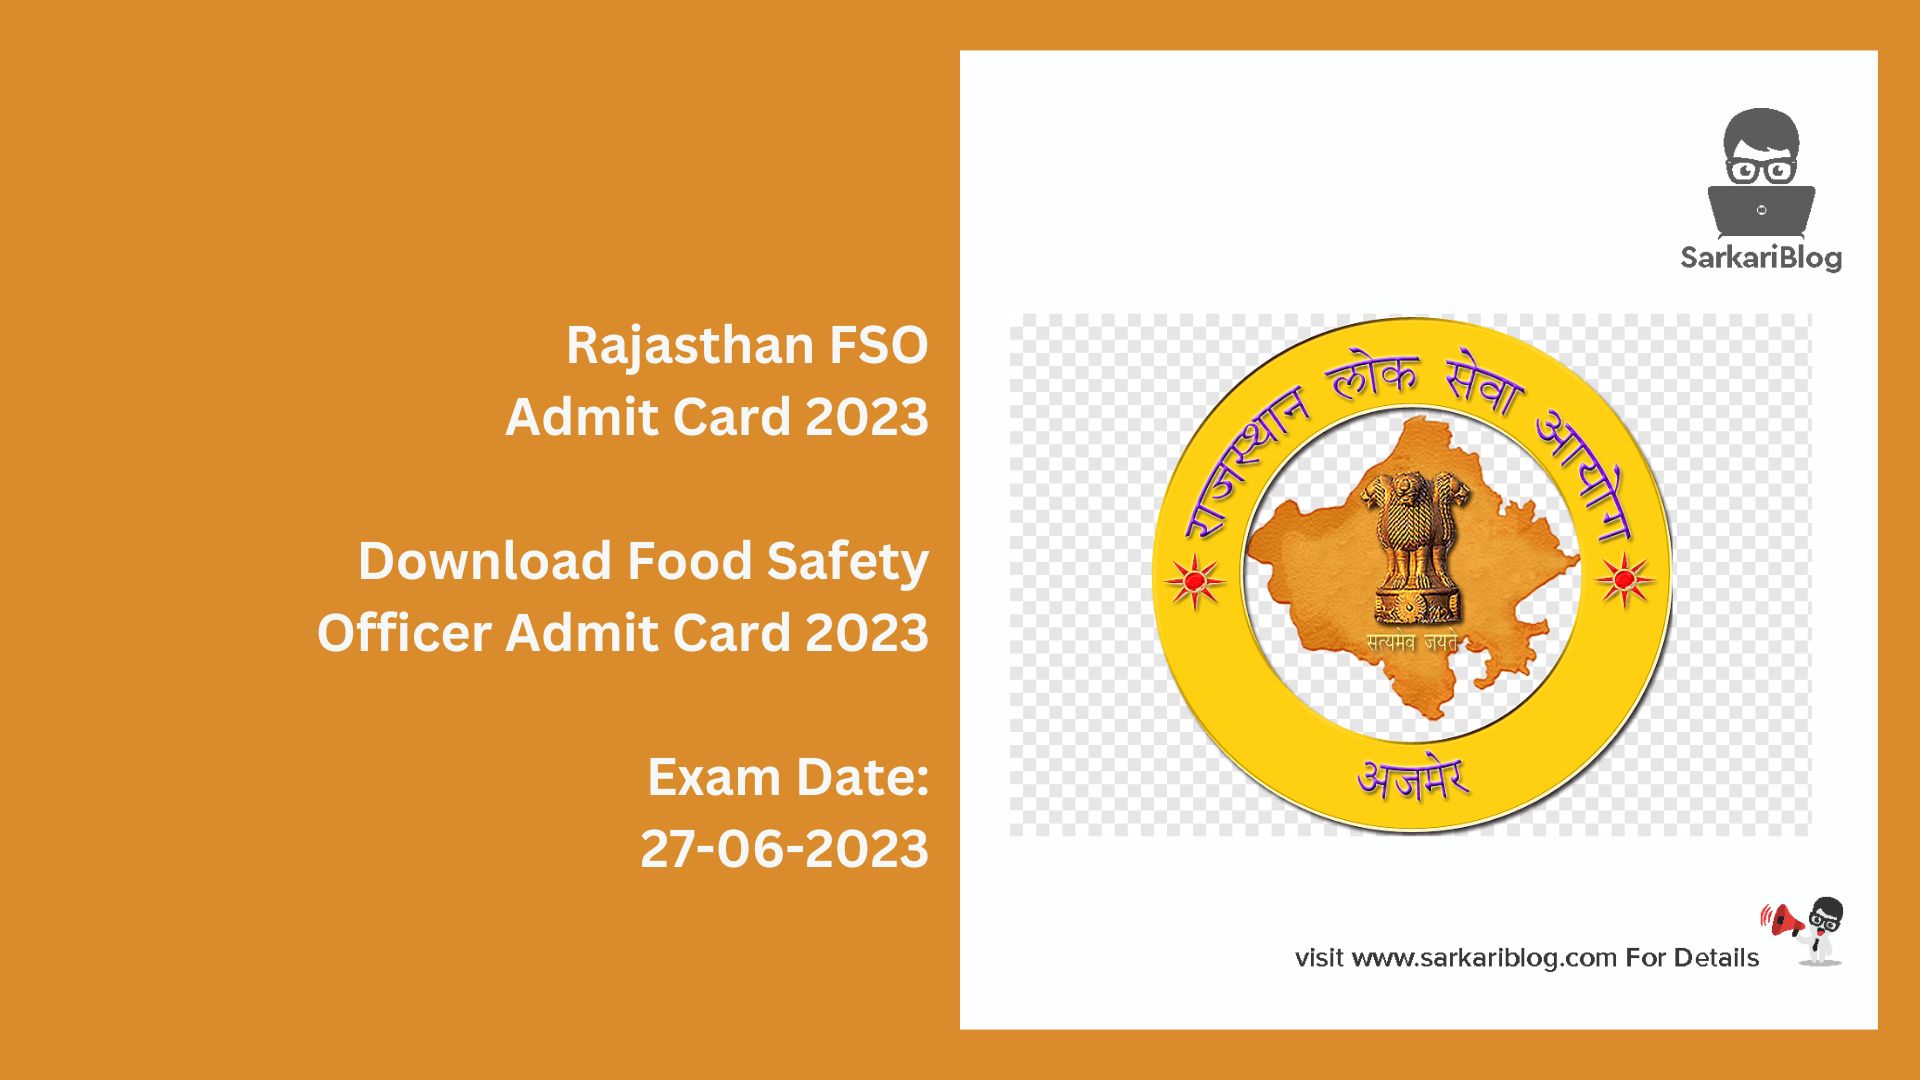 Rajasthan FSO Admit Card 2023